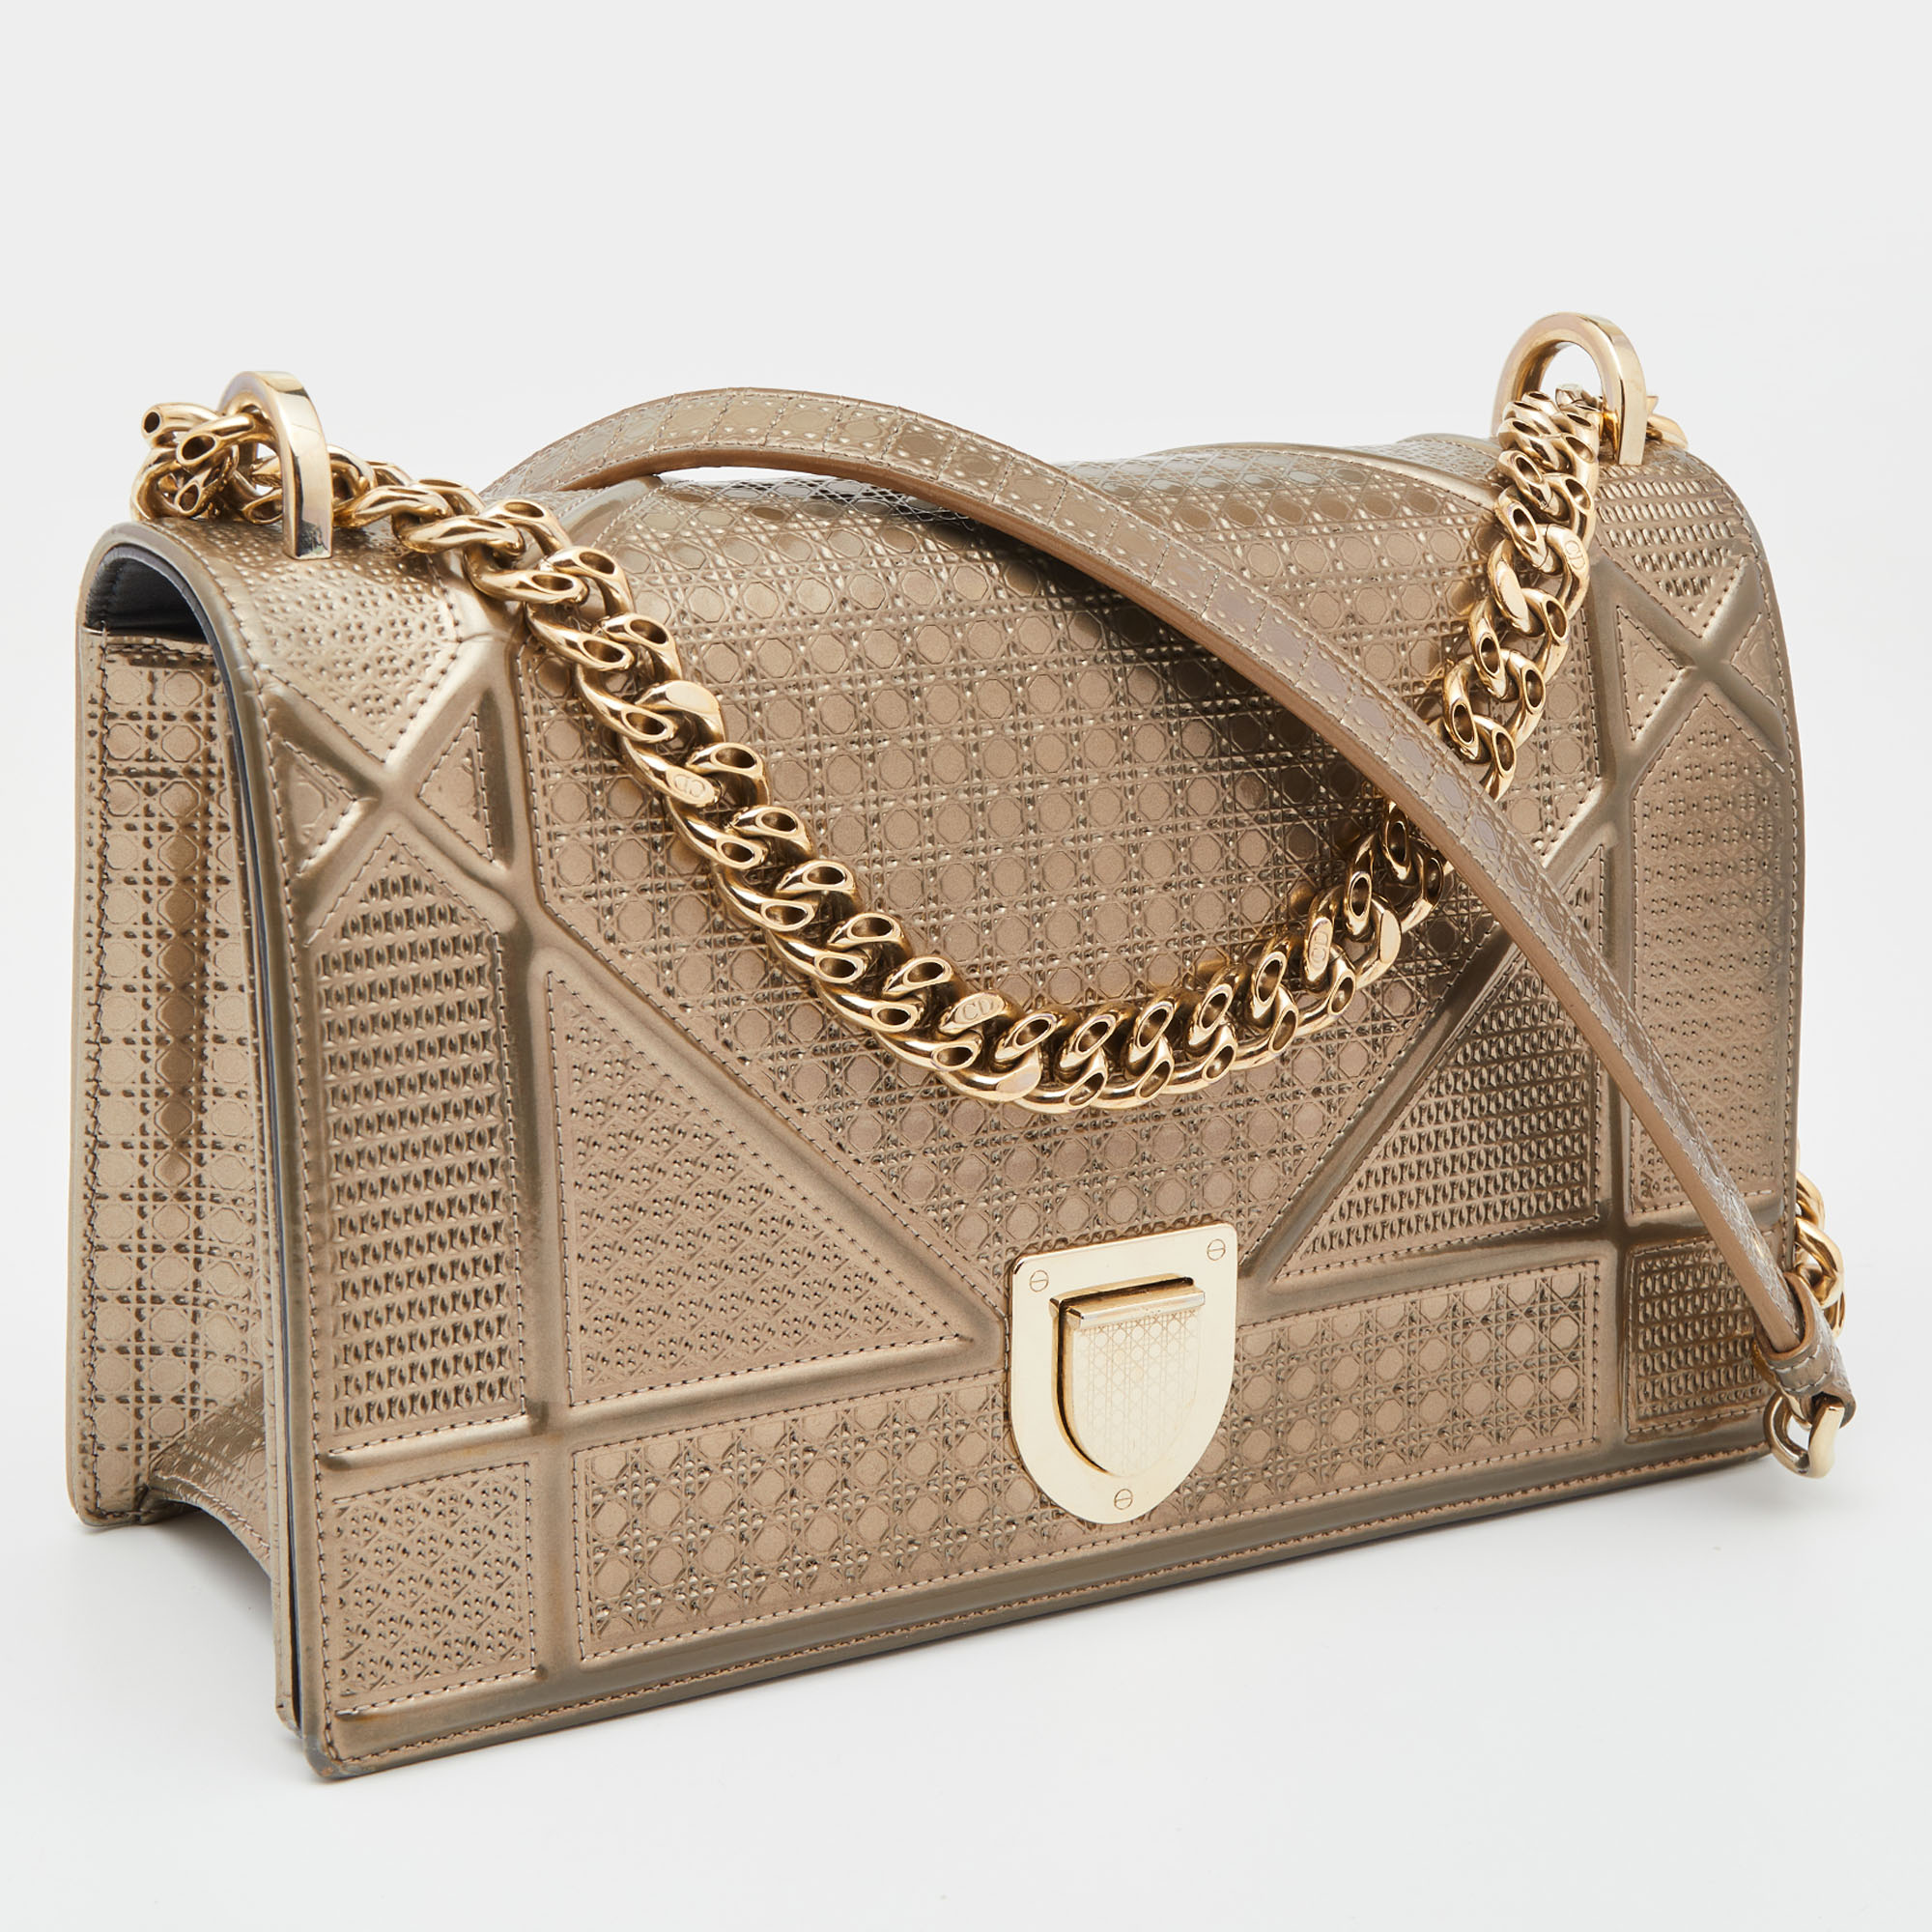 Dior Gold Microcannage Patent Leather Medium Diorama Flap Shoulder Bag